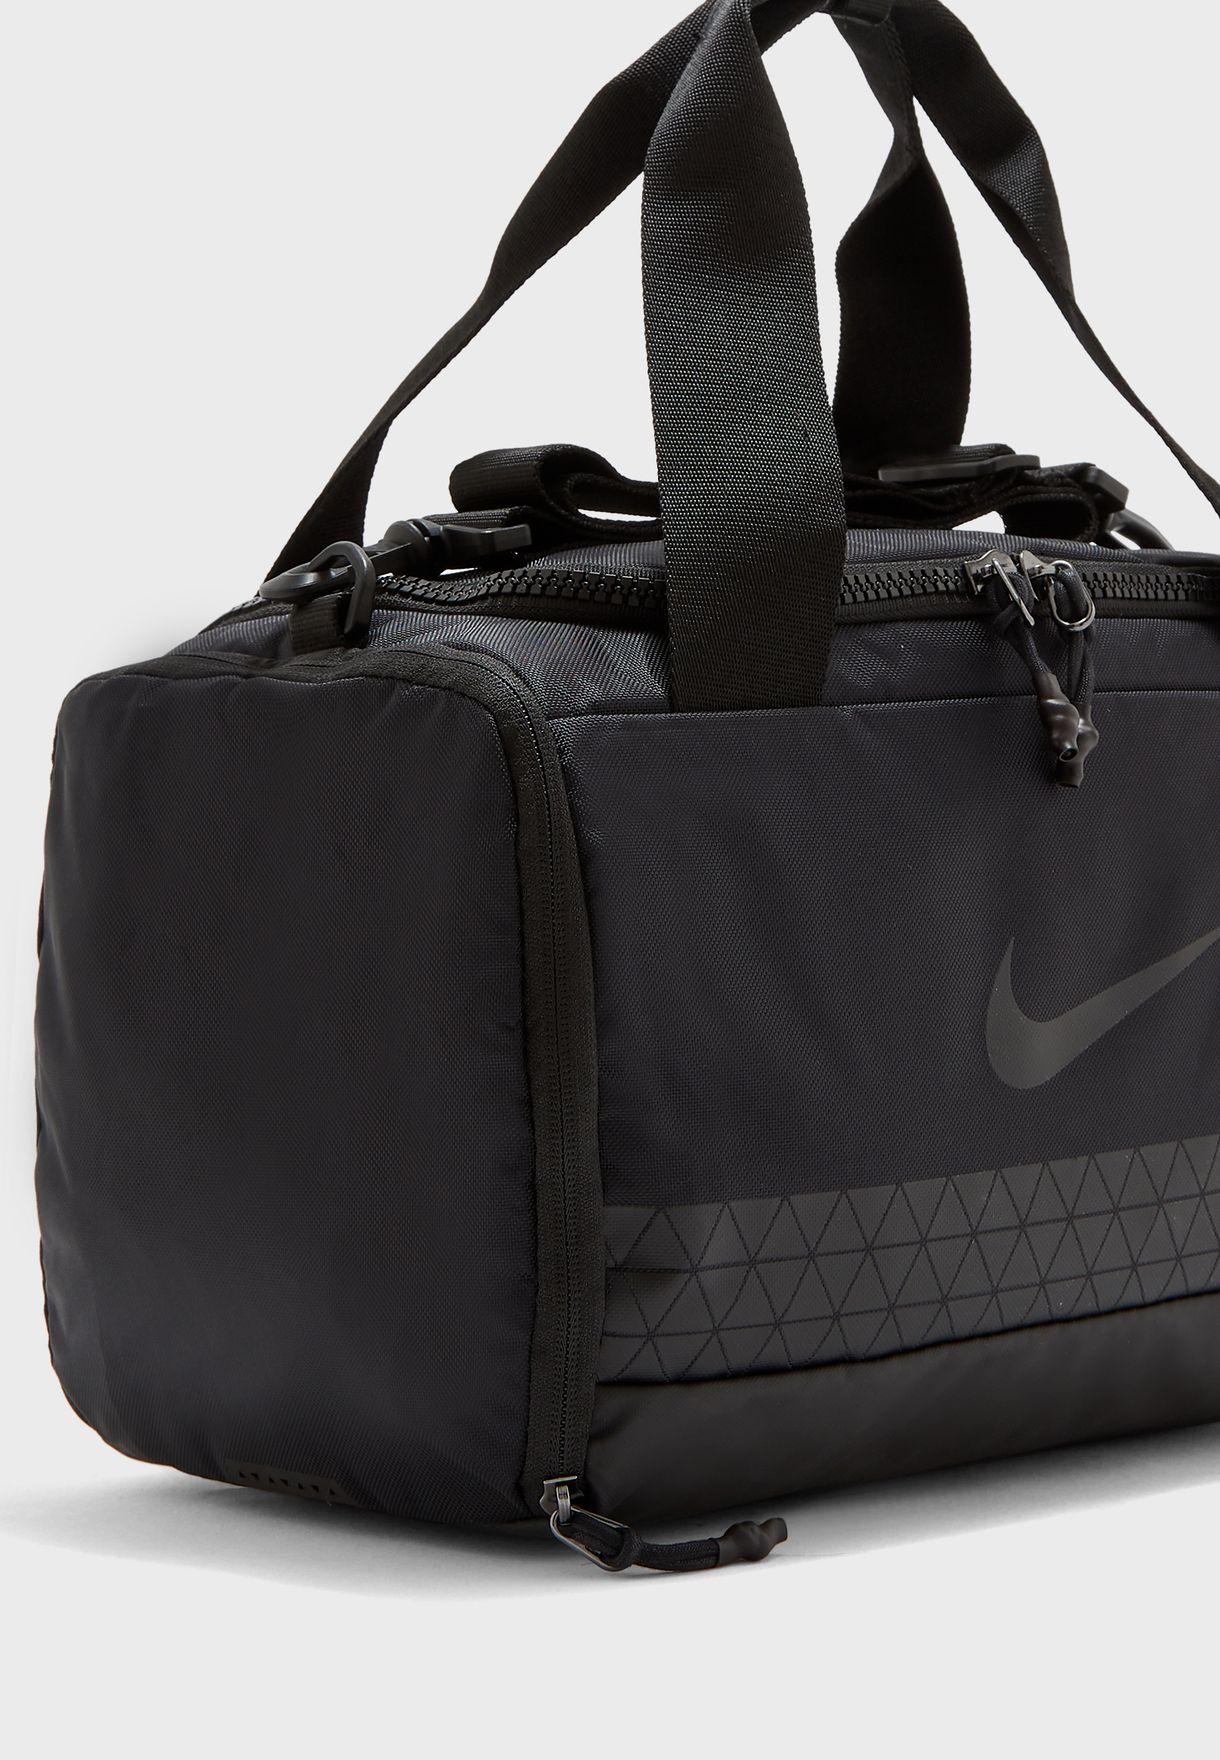 Nike Vapor Jet Drum Duffel Bag in Black [B5545-010] | Find Your Sole